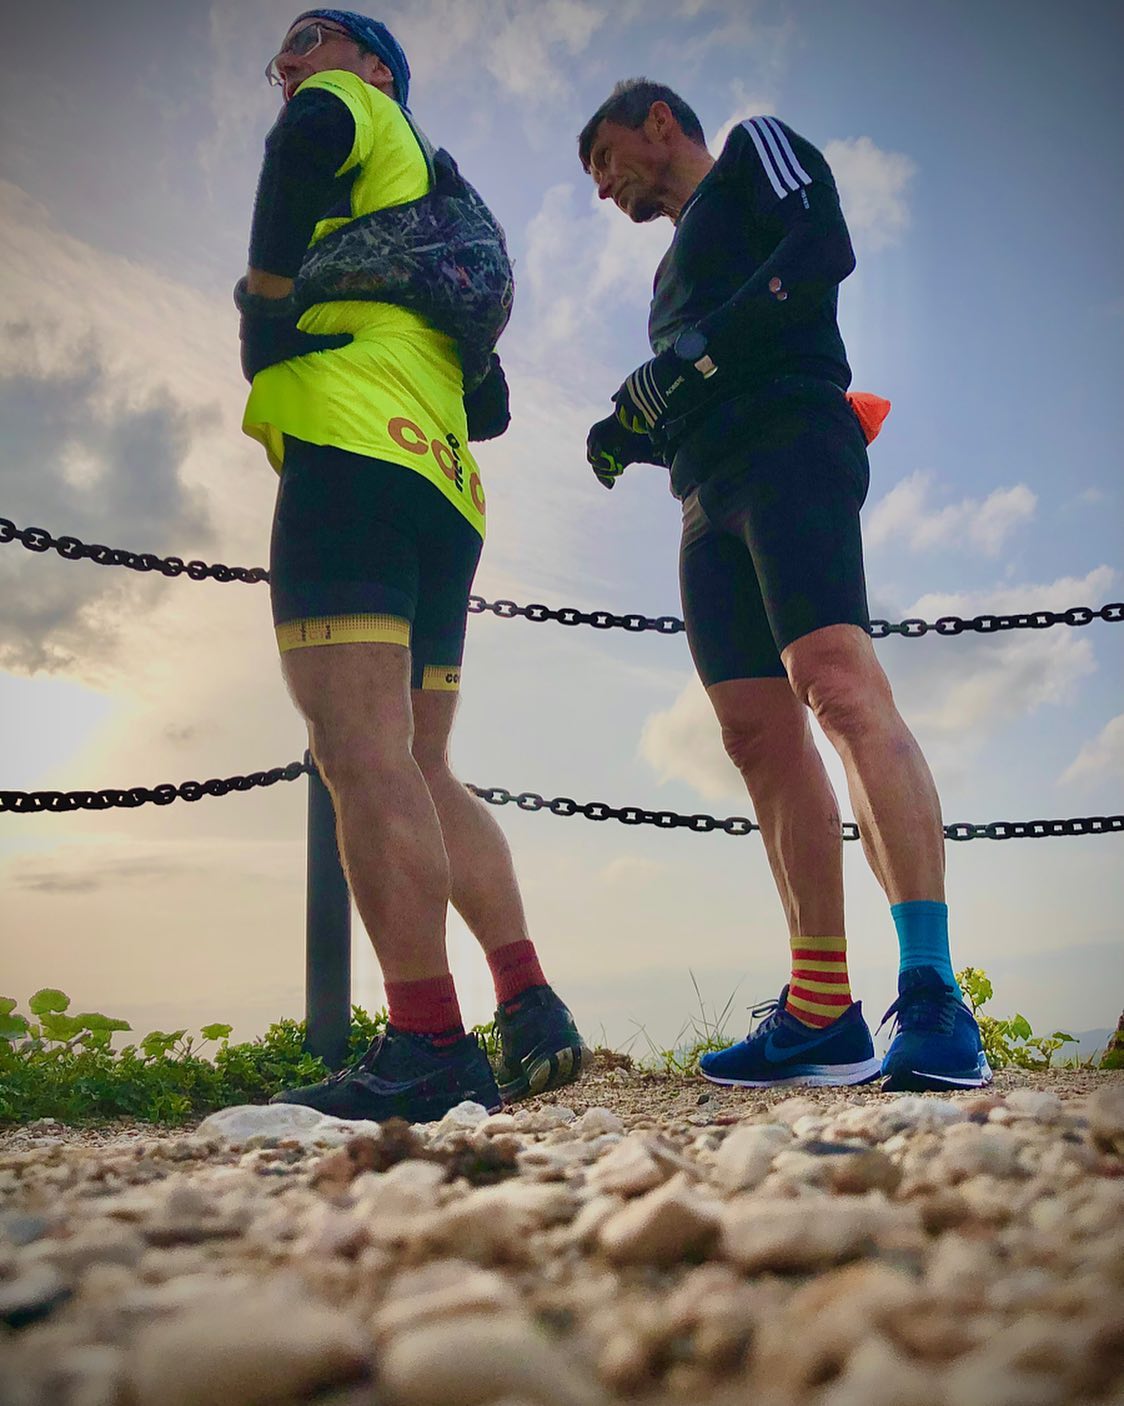 On anem ara? / Where do we go now?
.
.
Foto: @pacocalvosavall 
.
#trailrunning #trailrunner #running #runner #carrerasdemontaña #muntanyesdelamarina #sportphotography